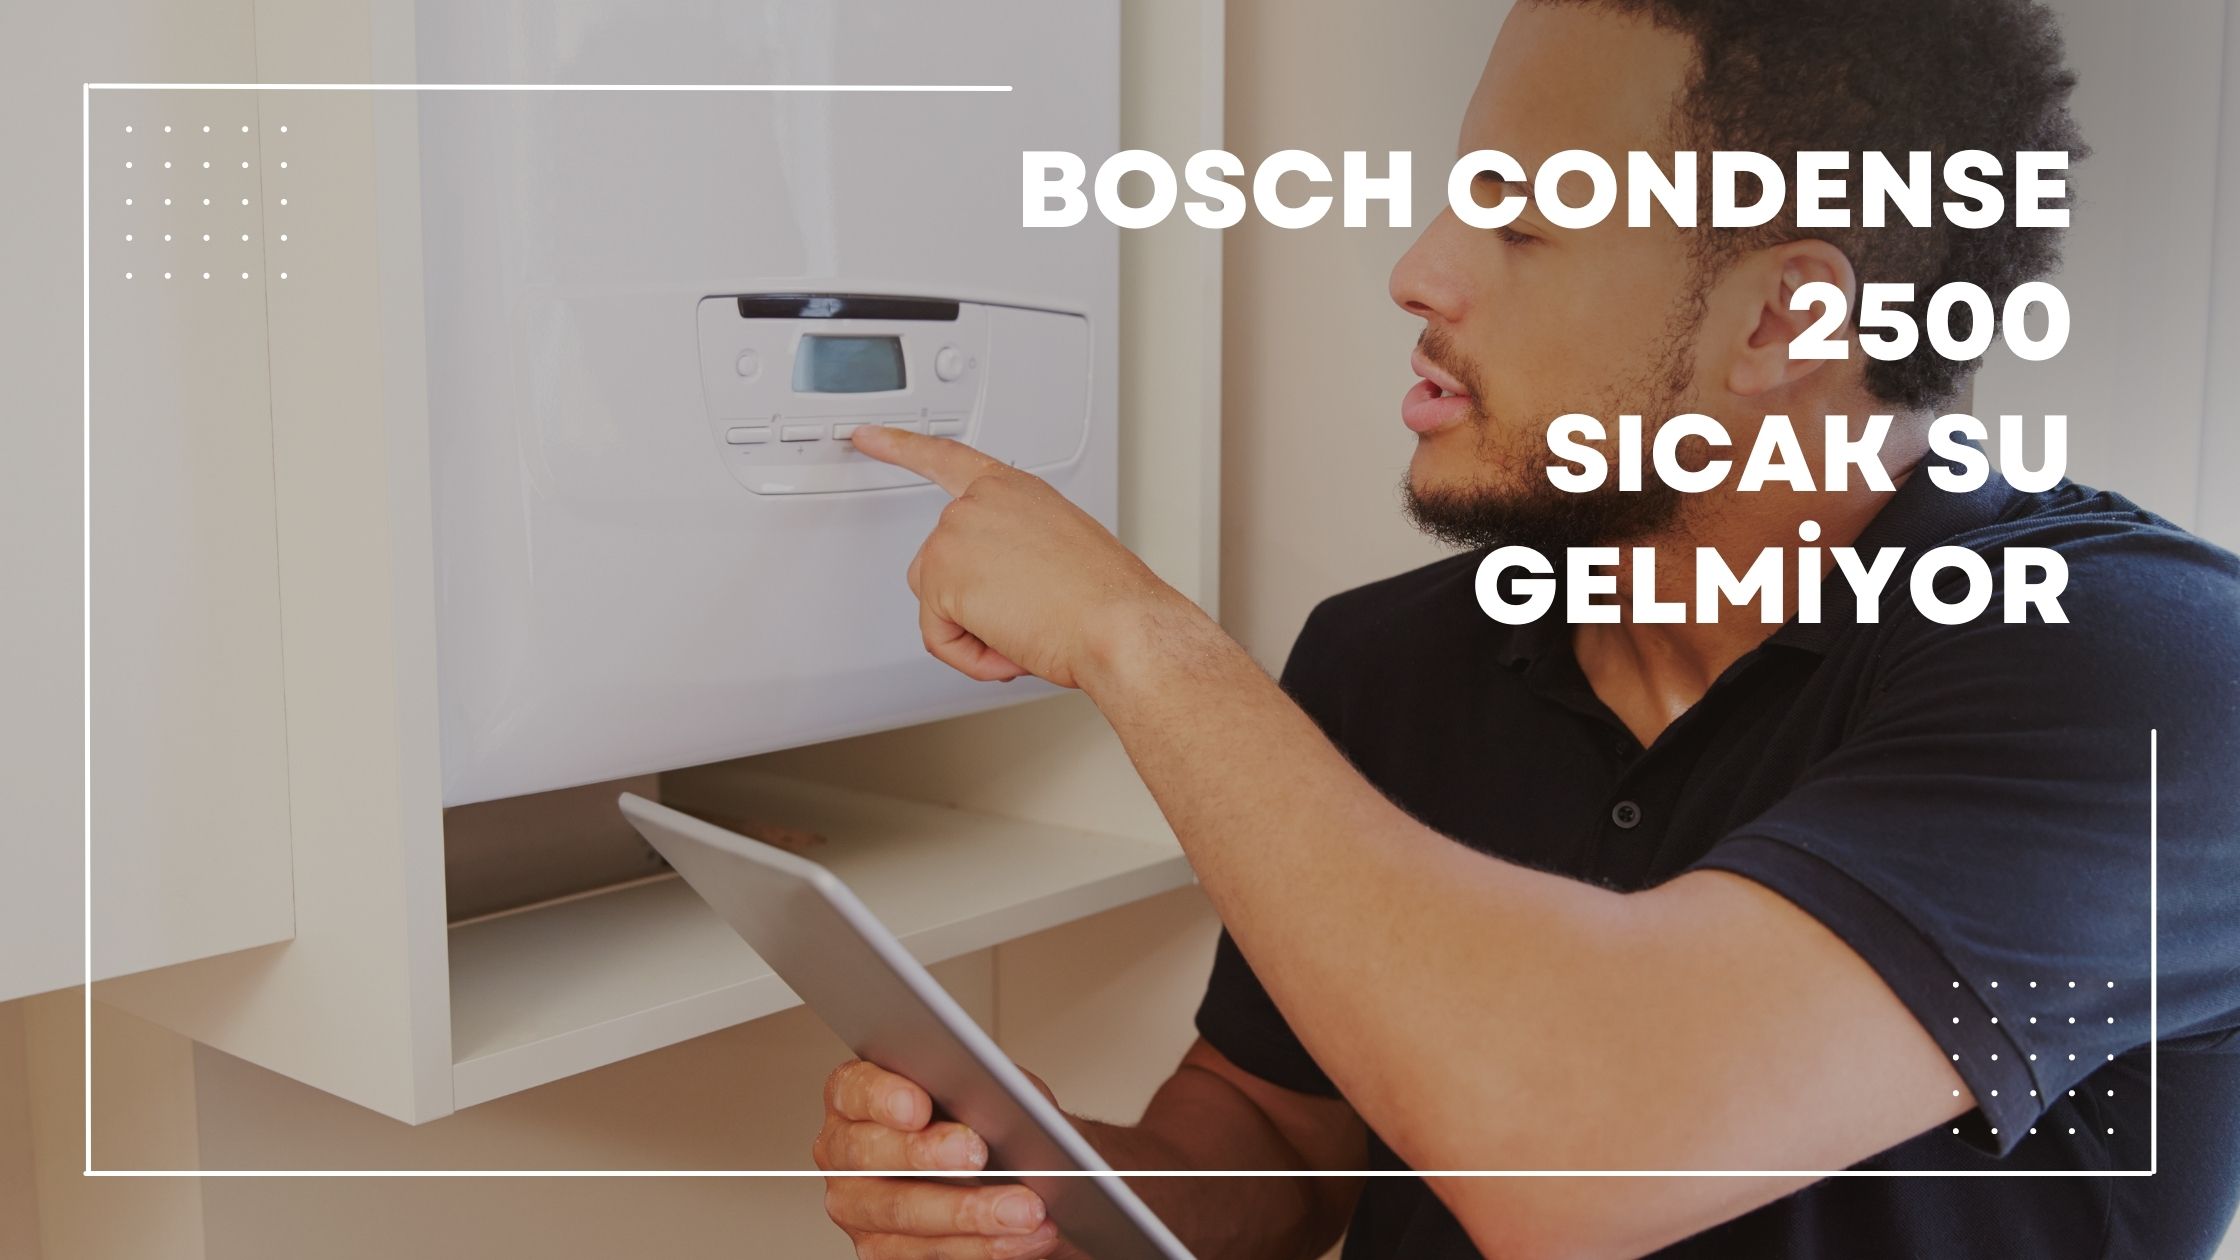 Bosch Condense 2500 Sıcak Su Gelmiyor